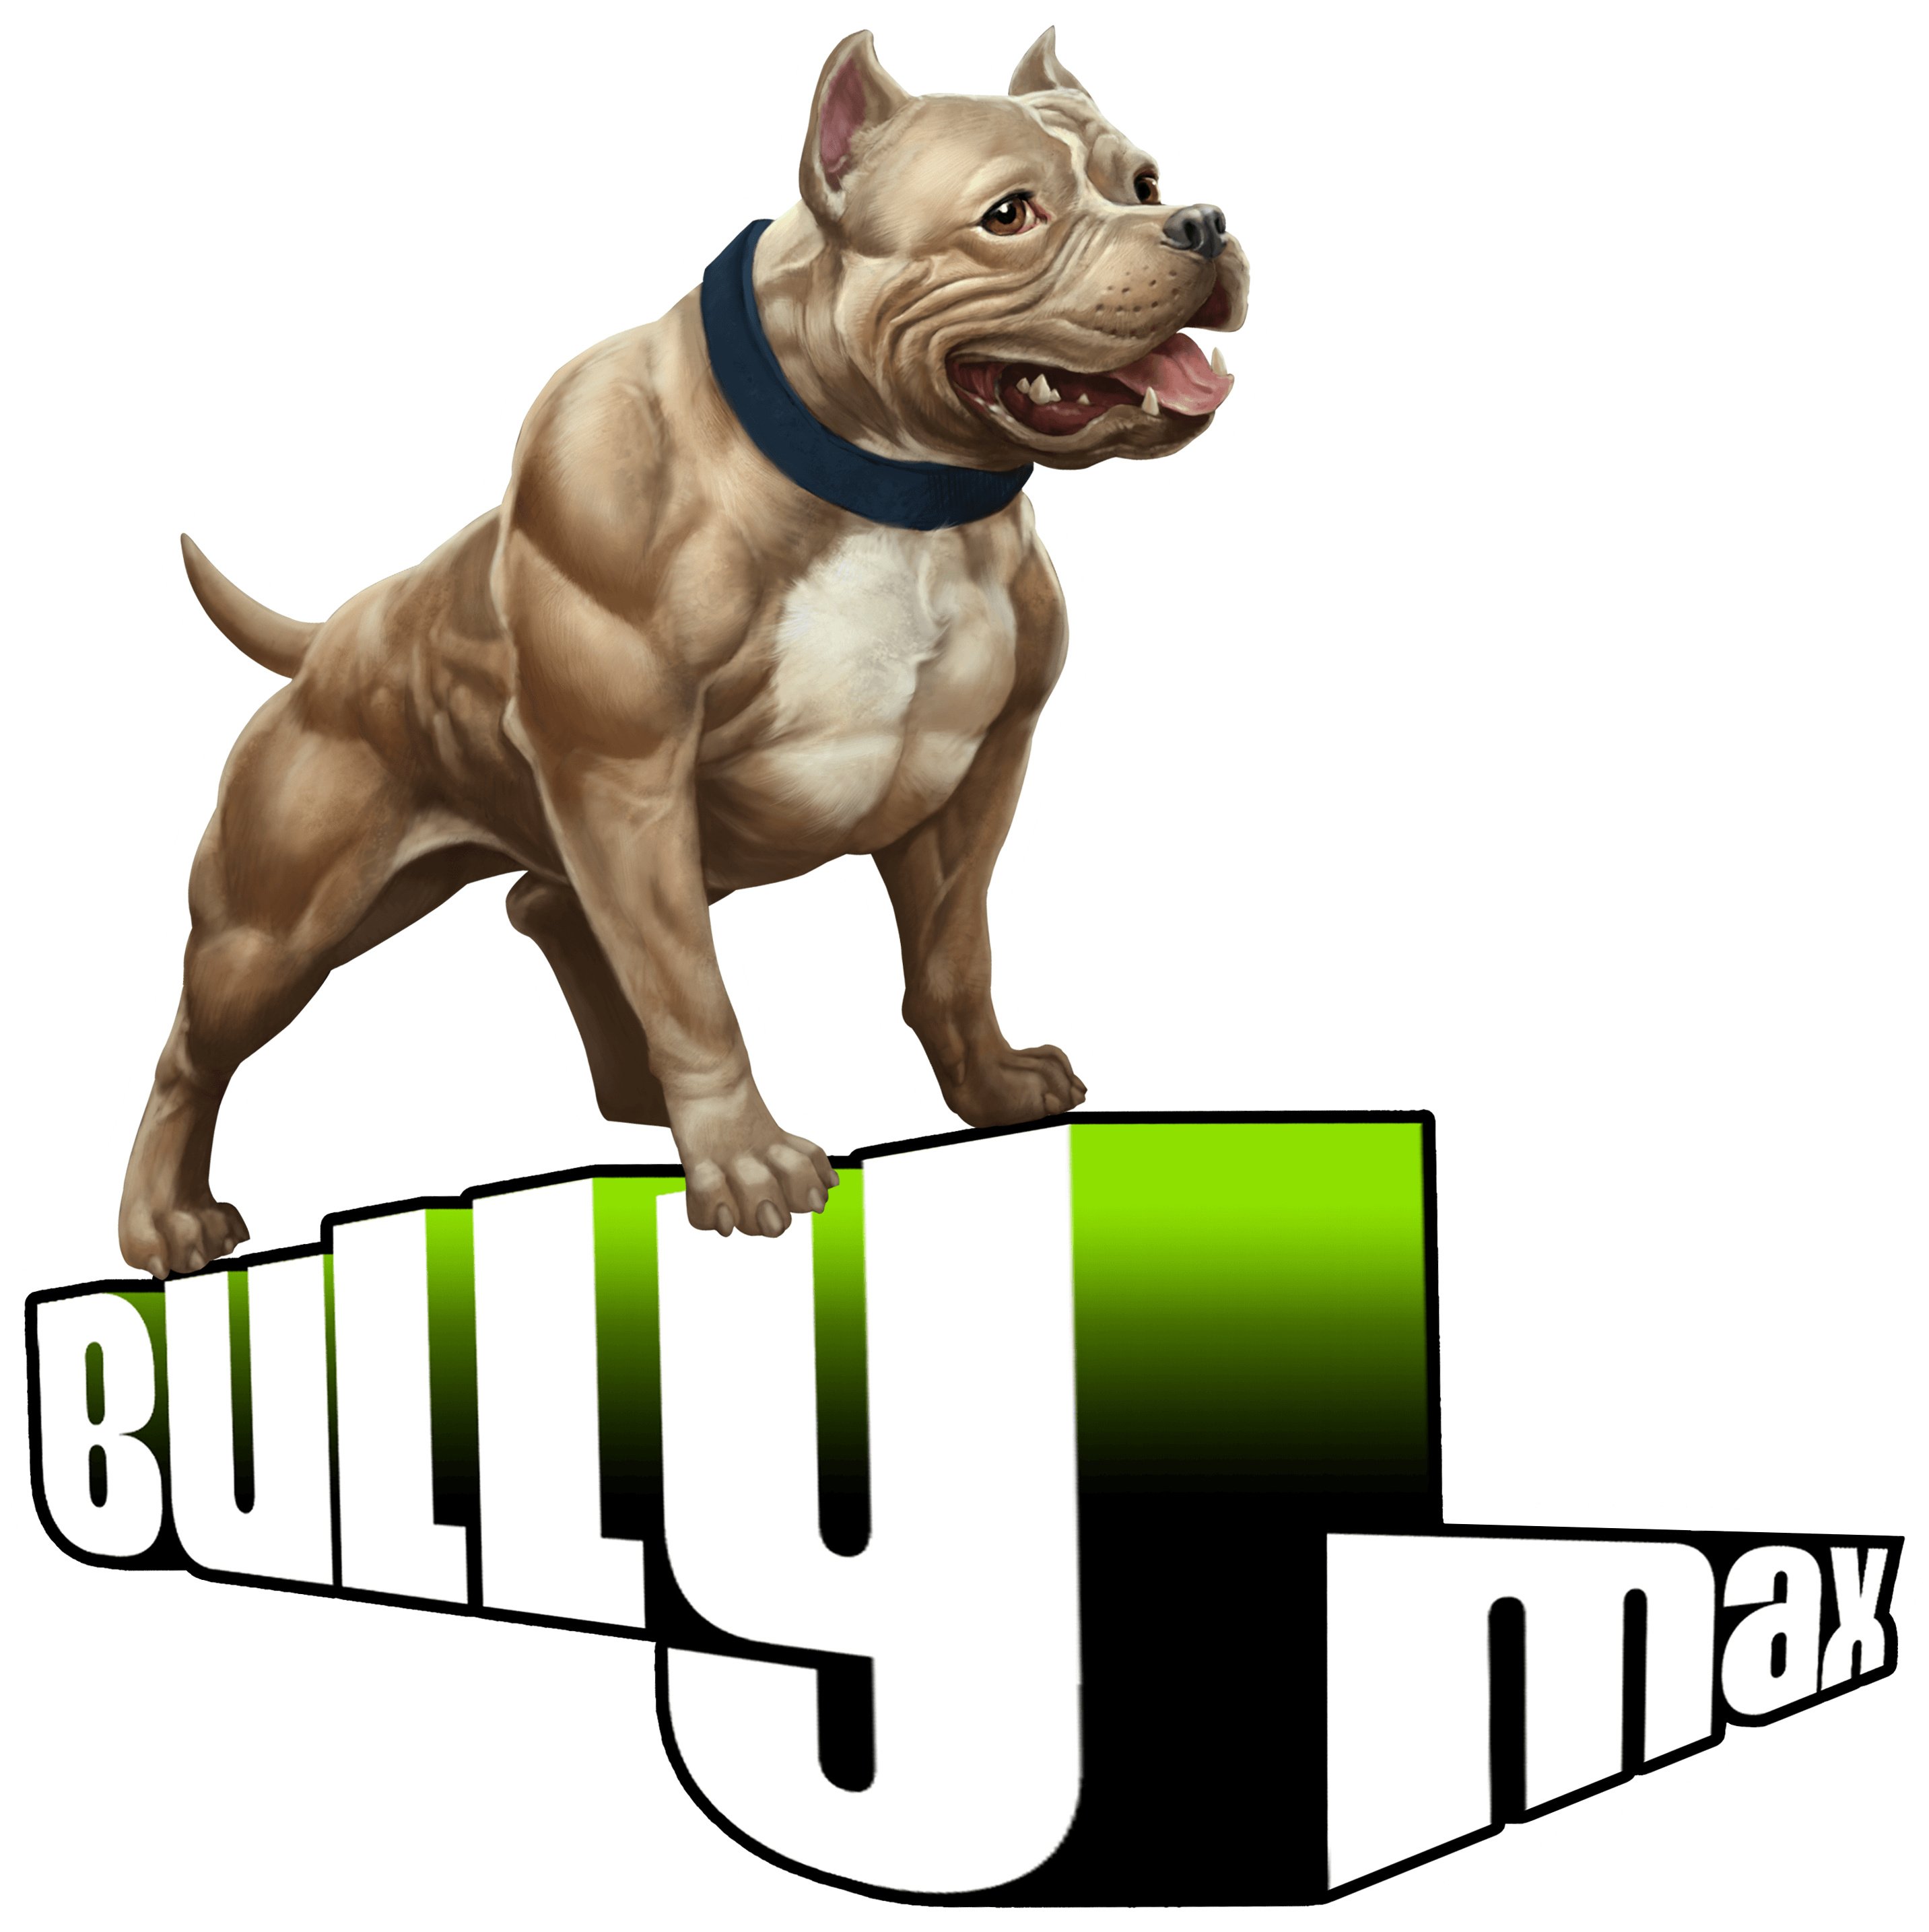 Bully Logo PNG Image Background